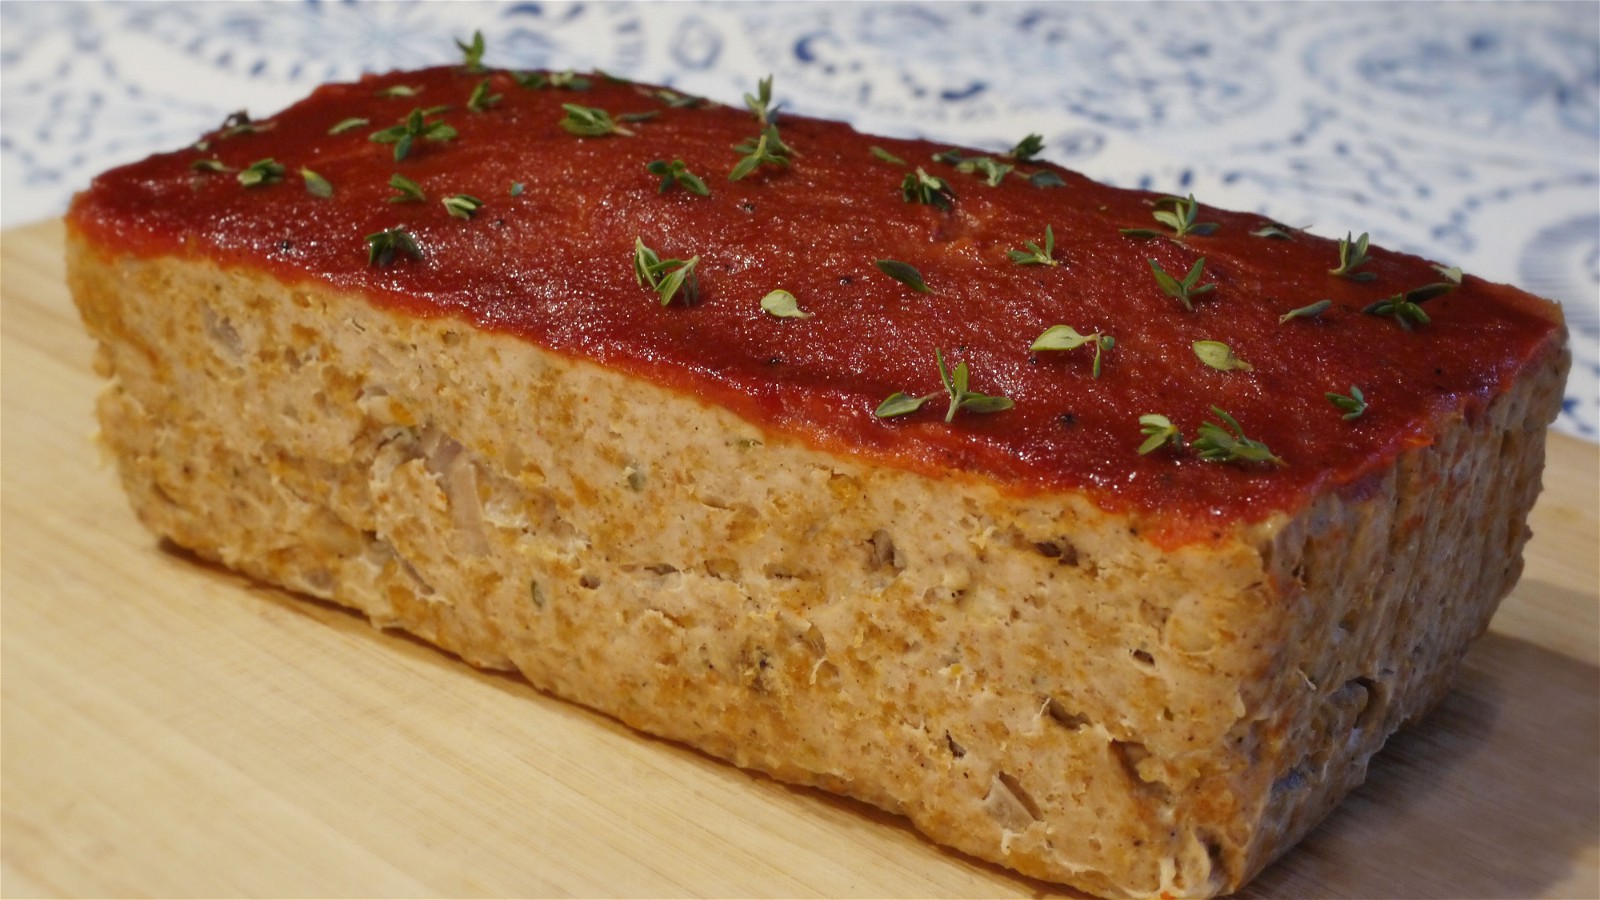 Image of Turkey Meatloaf with Toasted Pine Nuts, Raisins & Tomato-Dijon Glaze